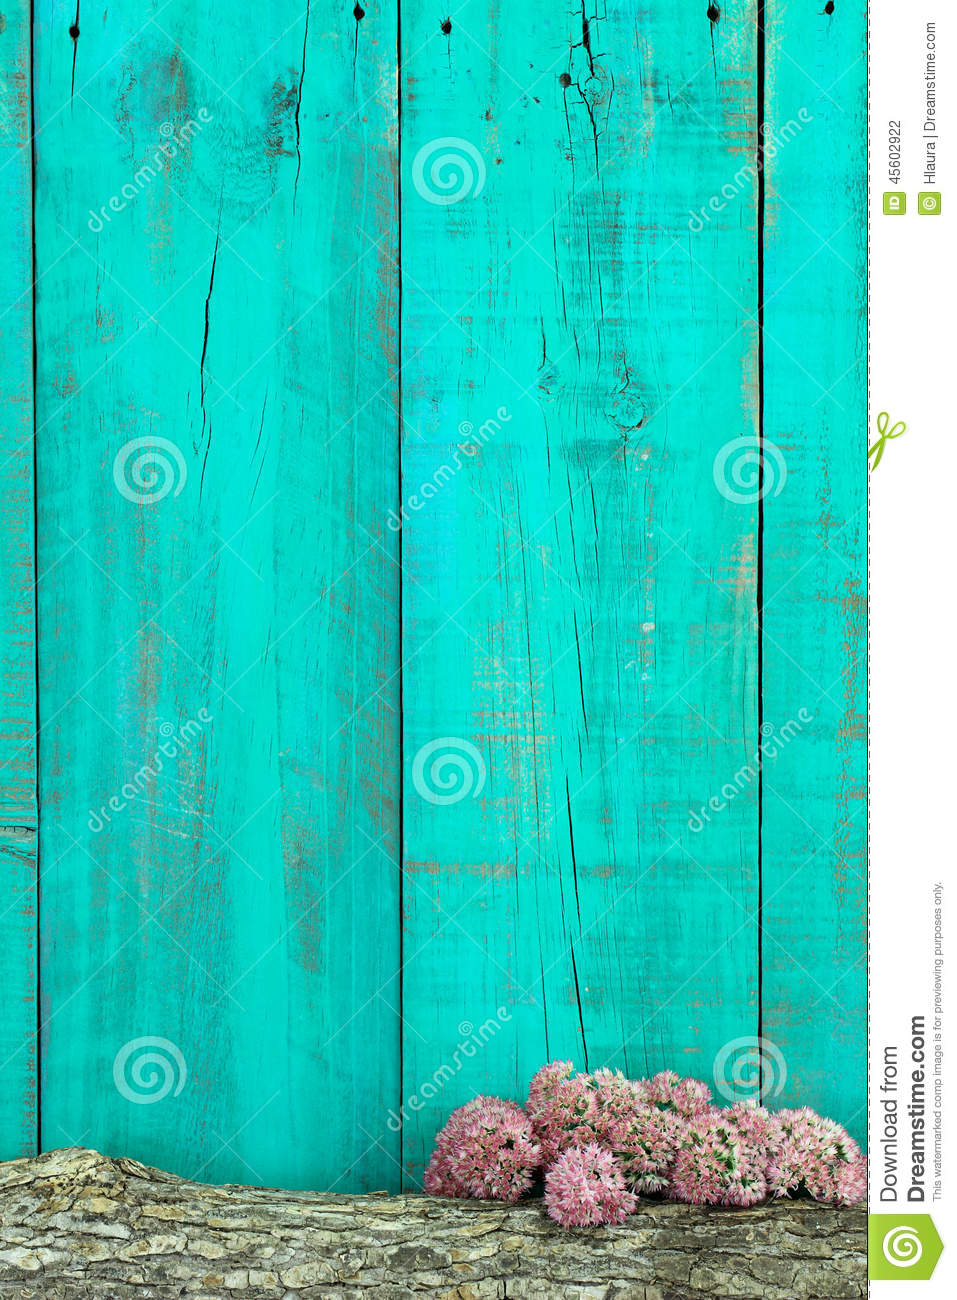 Background Log And Pink Flowers Border Antique Teal Blue Wooden Fence